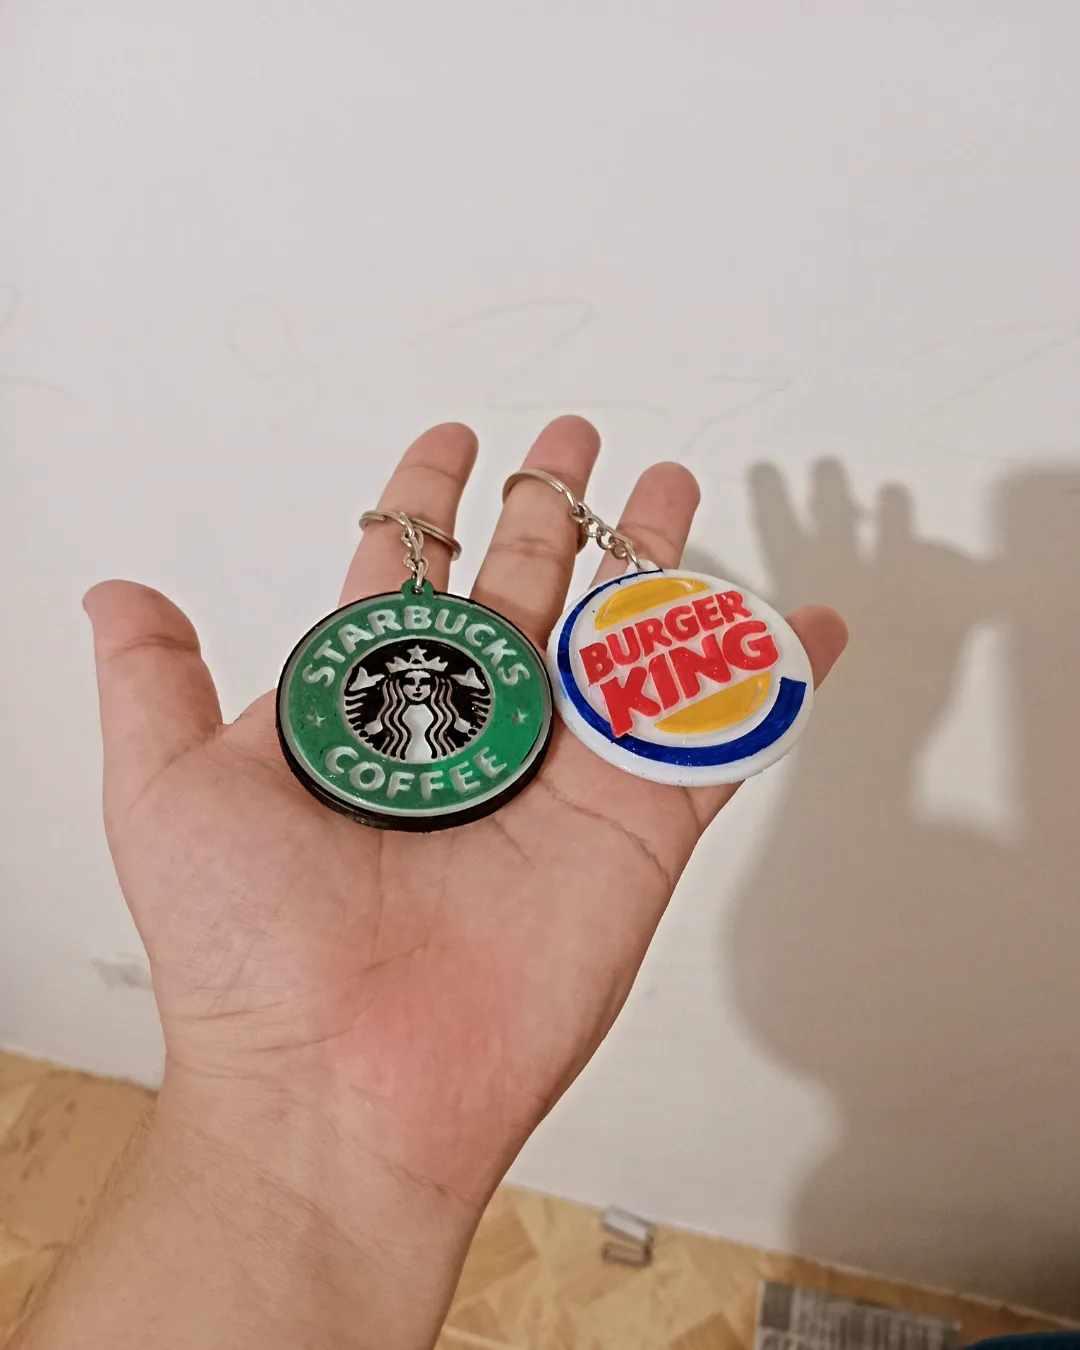 Starbucks and burger King keychains 3d model